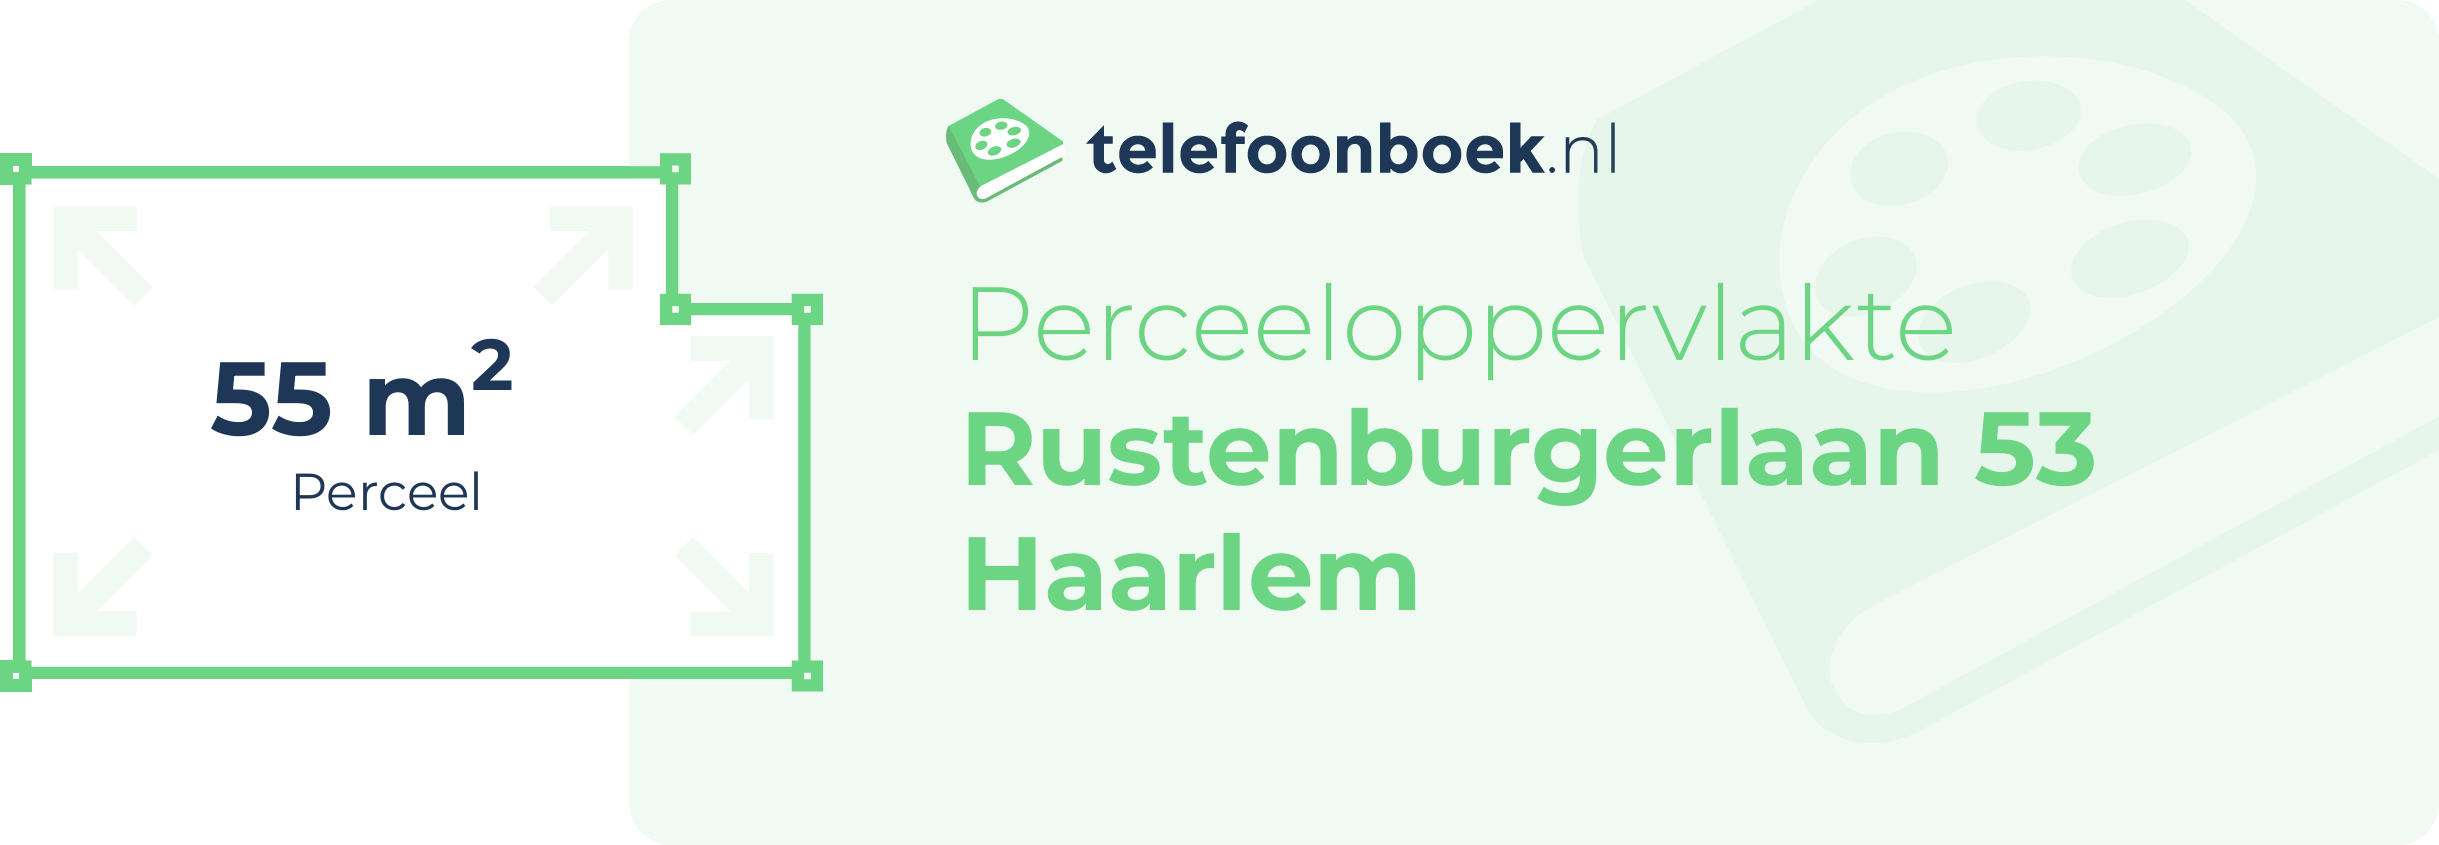 Perceeloppervlakte Rustenburgerlaan 53 Haarlem